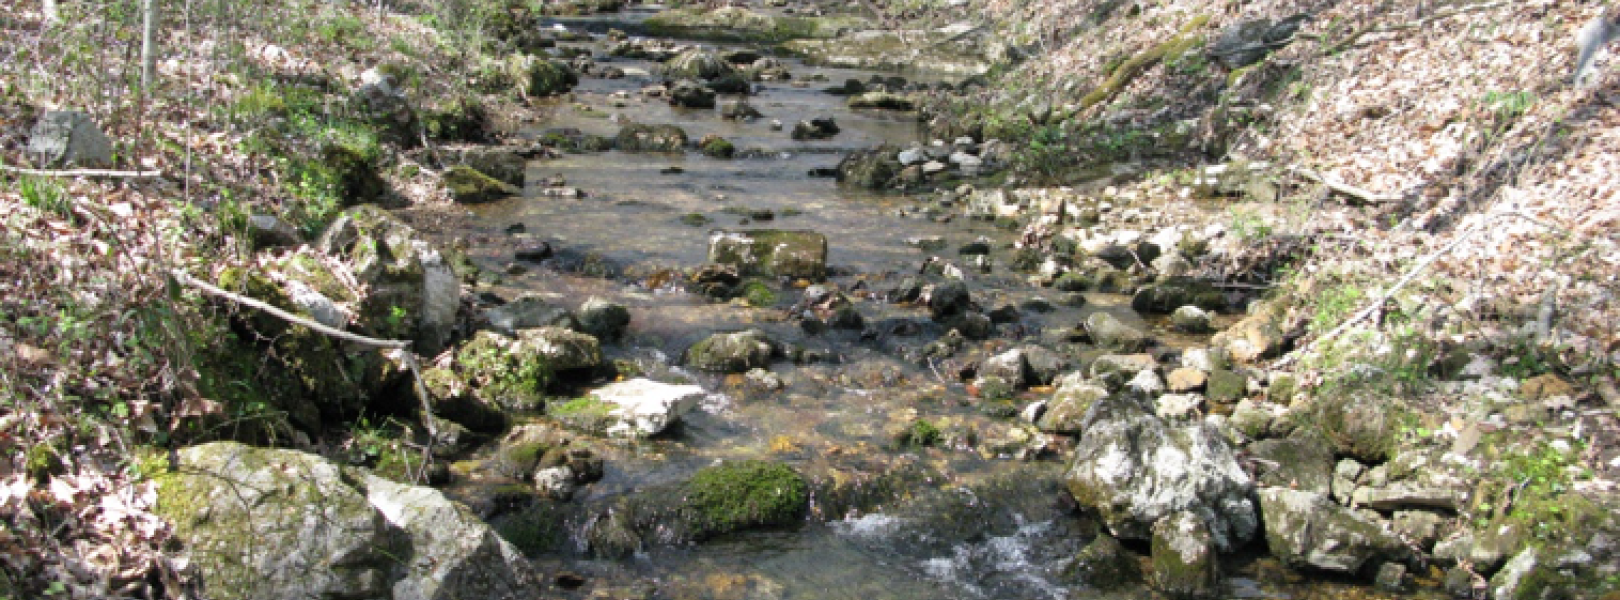 Picture of stream at core aquatic site WALK